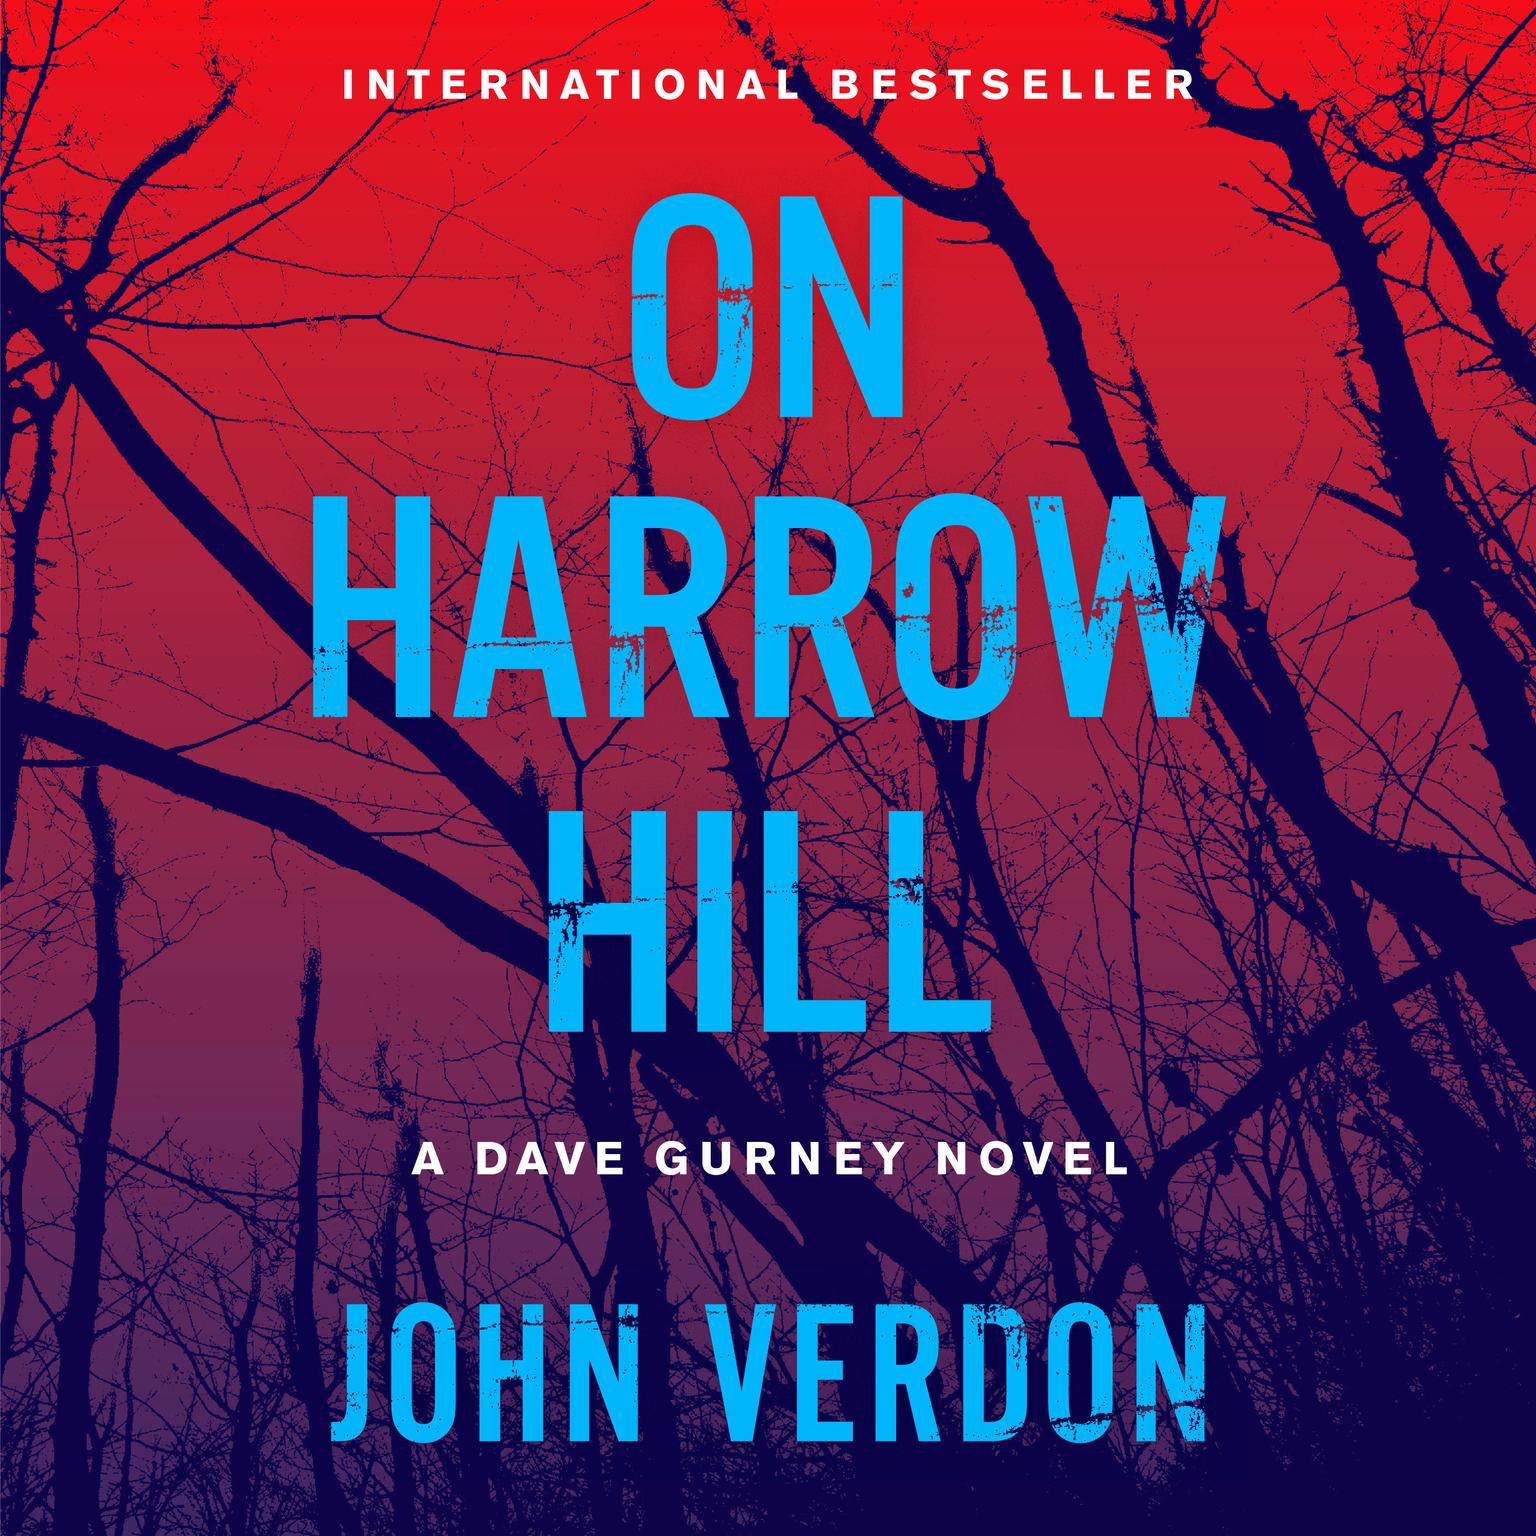 On Harrow Hill: A Dave Guerney Novel Audiobook, by John Verdon